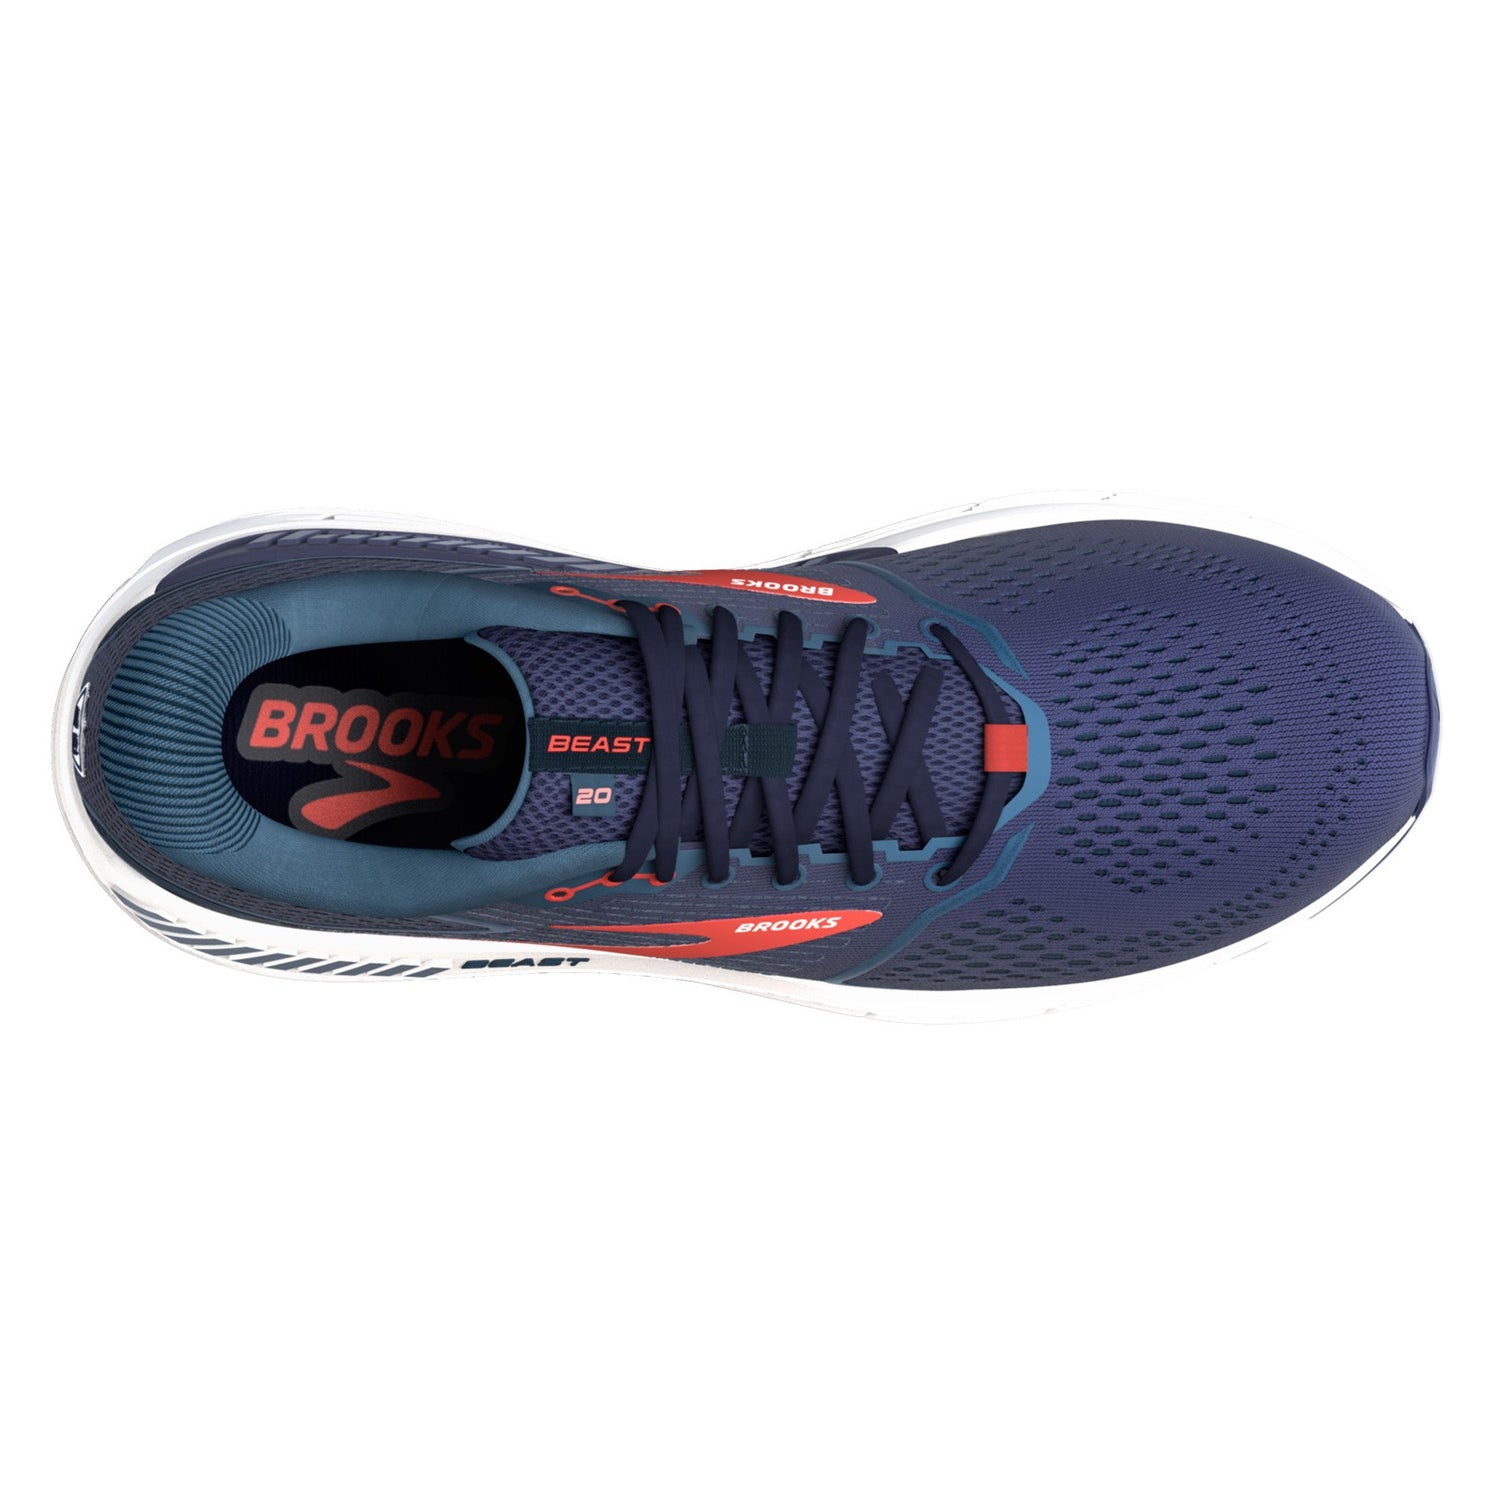 Peltz Shoes  Men's Brooks Beast 20 Running Shoe - Extra Wide Width Peacoat/Midnight/Red 110327 4E 480